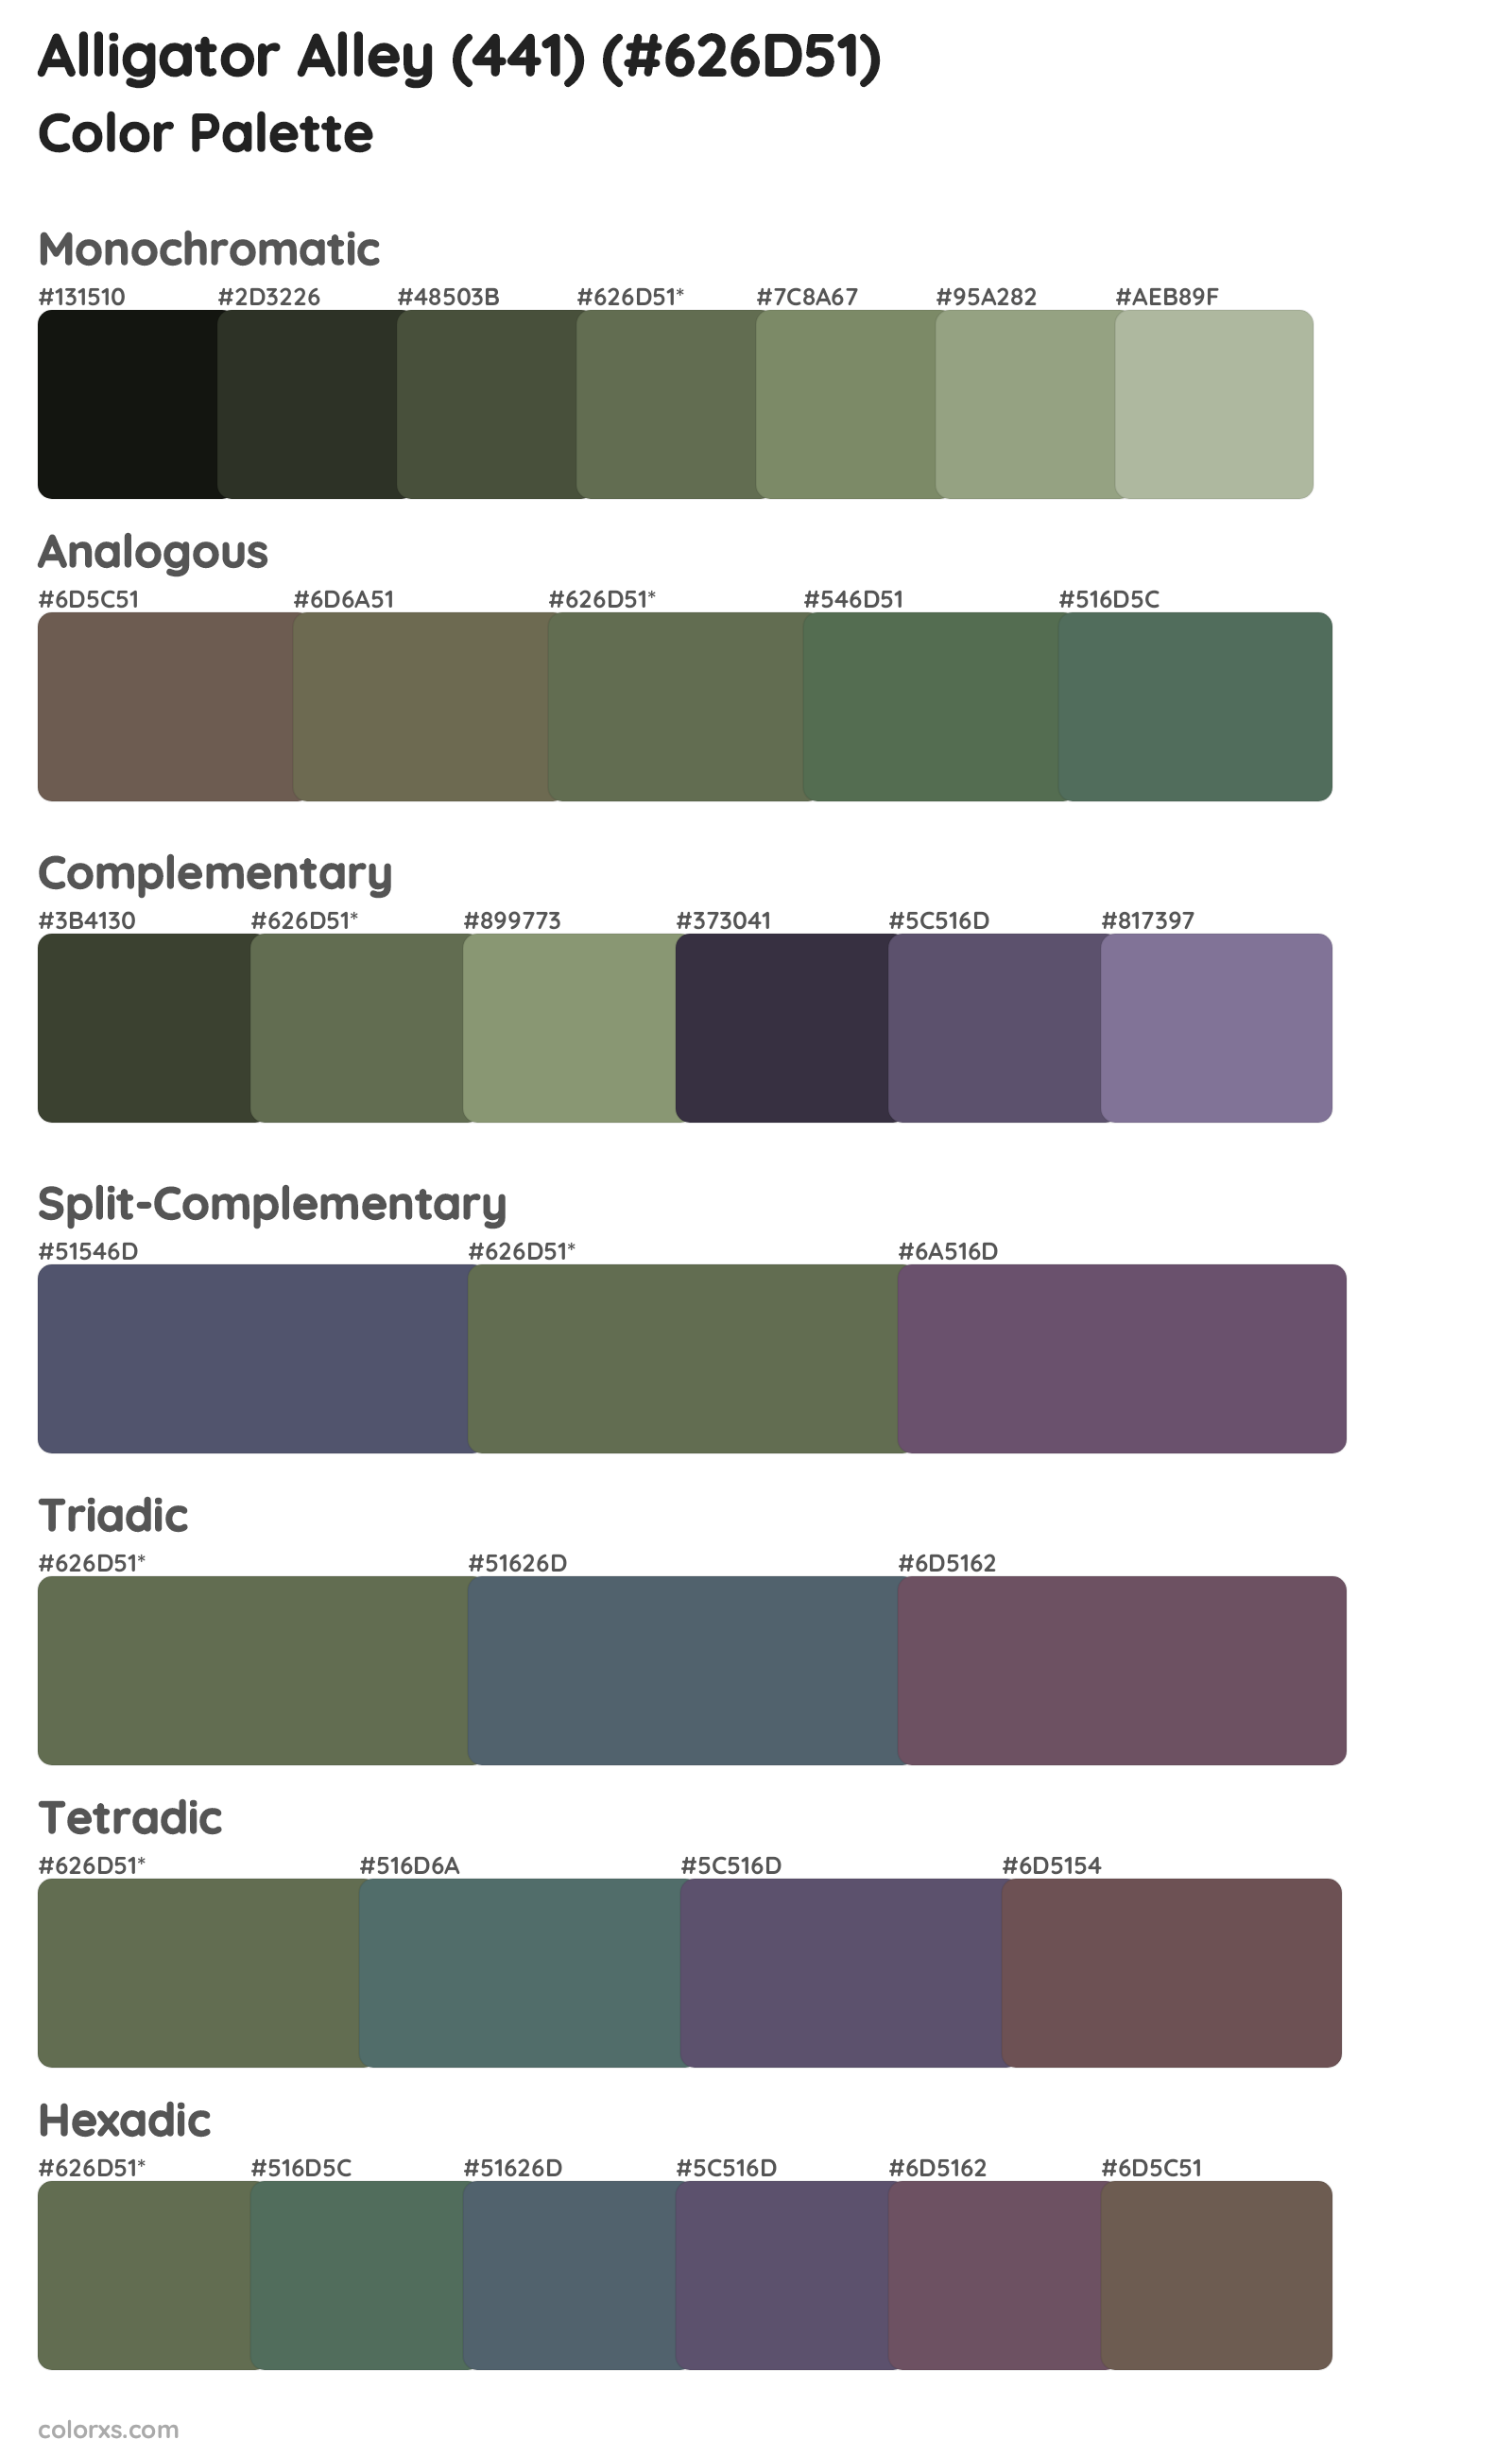 Alligator Alley (441) Color Scheme Palettes